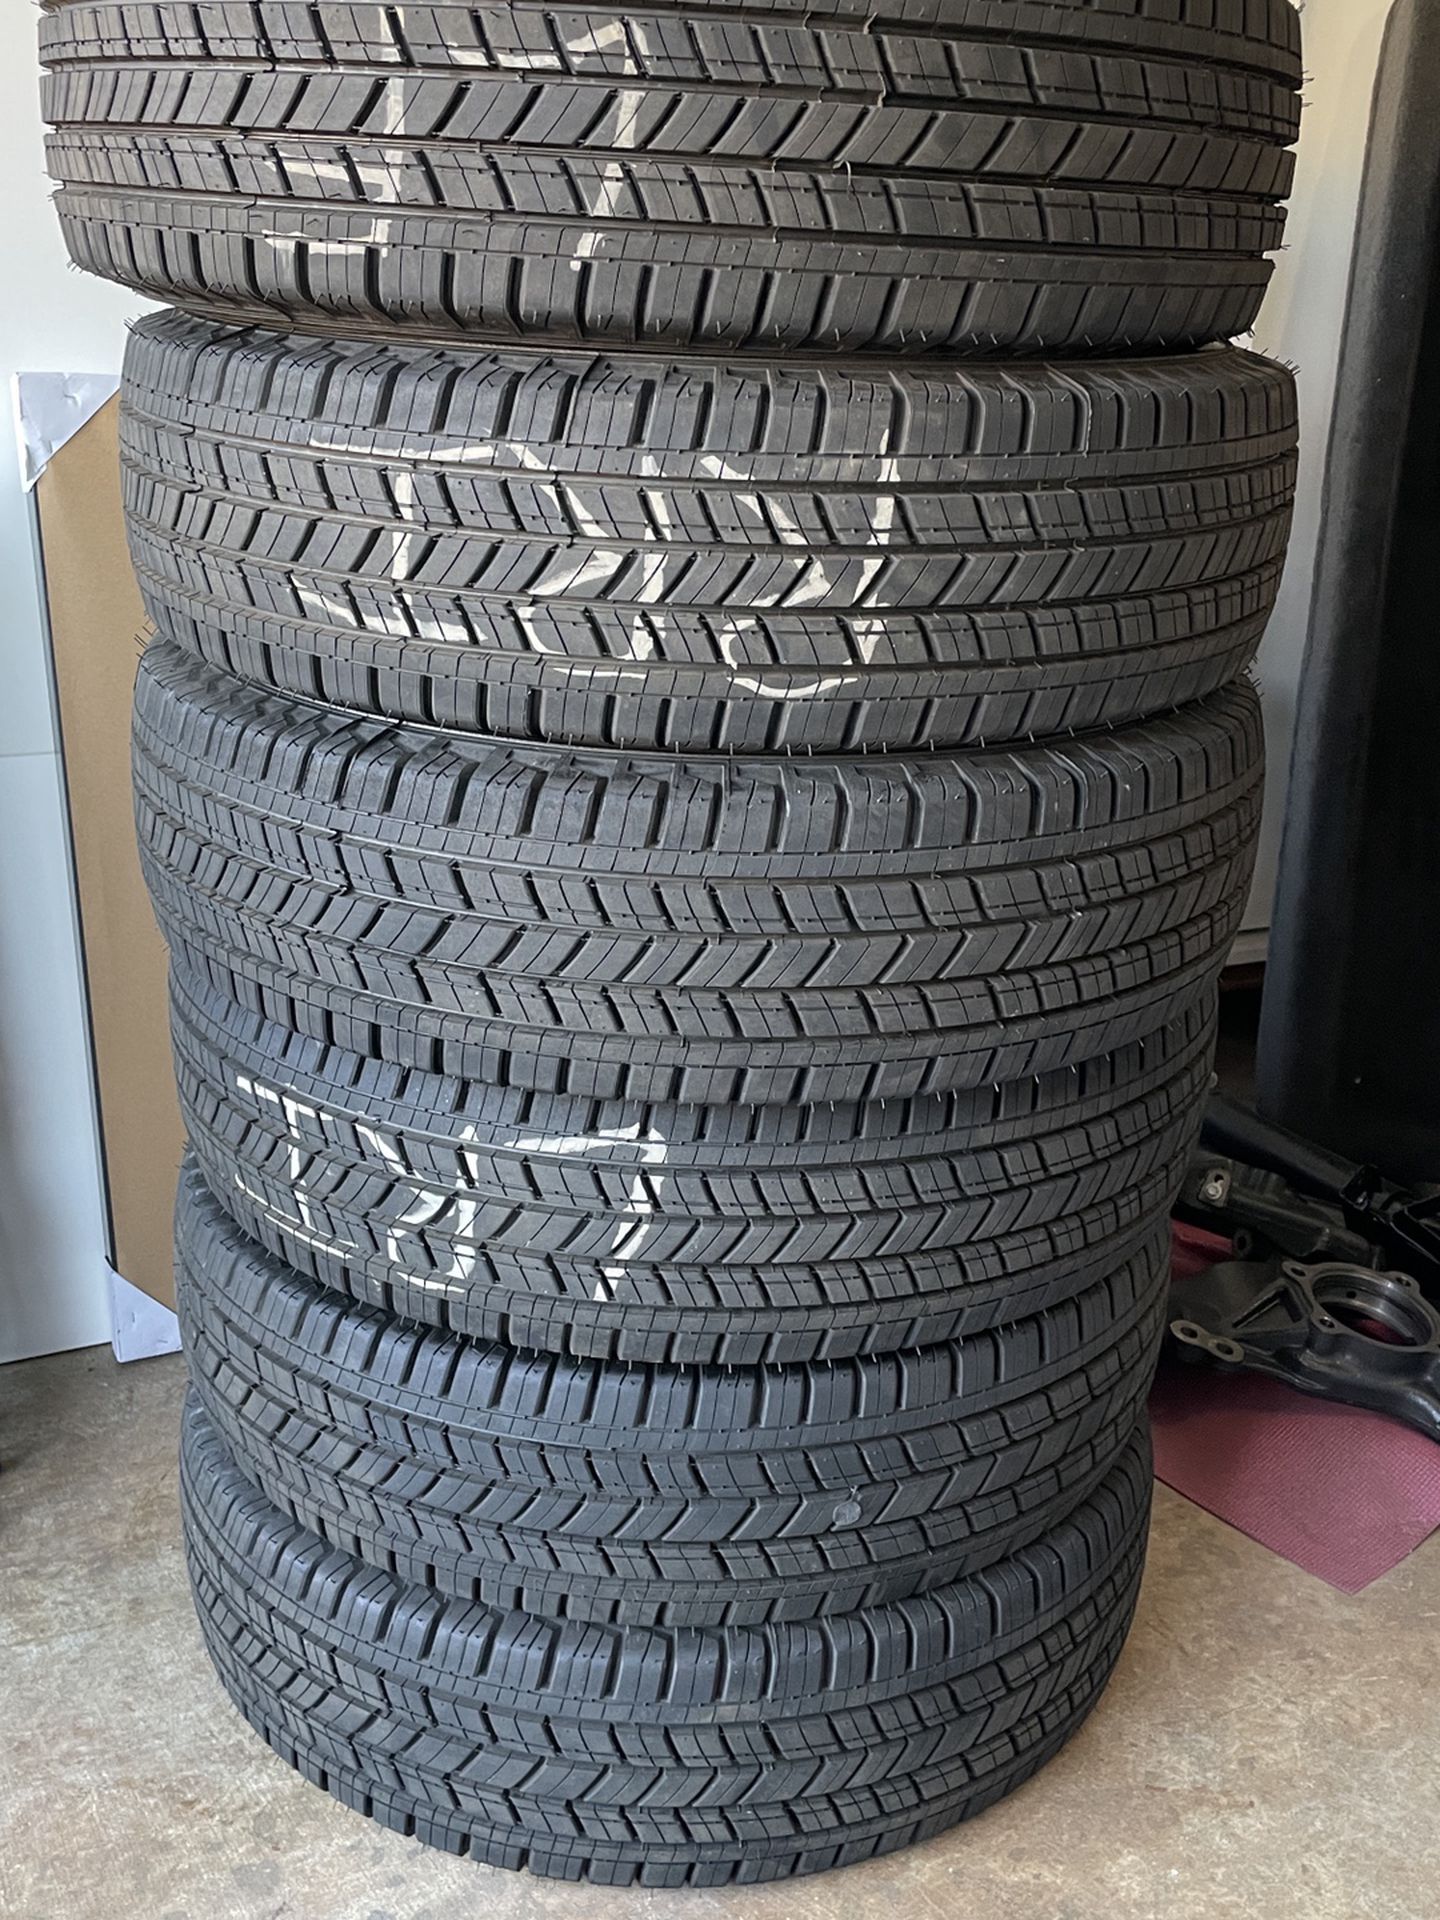 BRAND NEW - 6 - Michelin LT235/80R17 Tires w/ Stock Rims